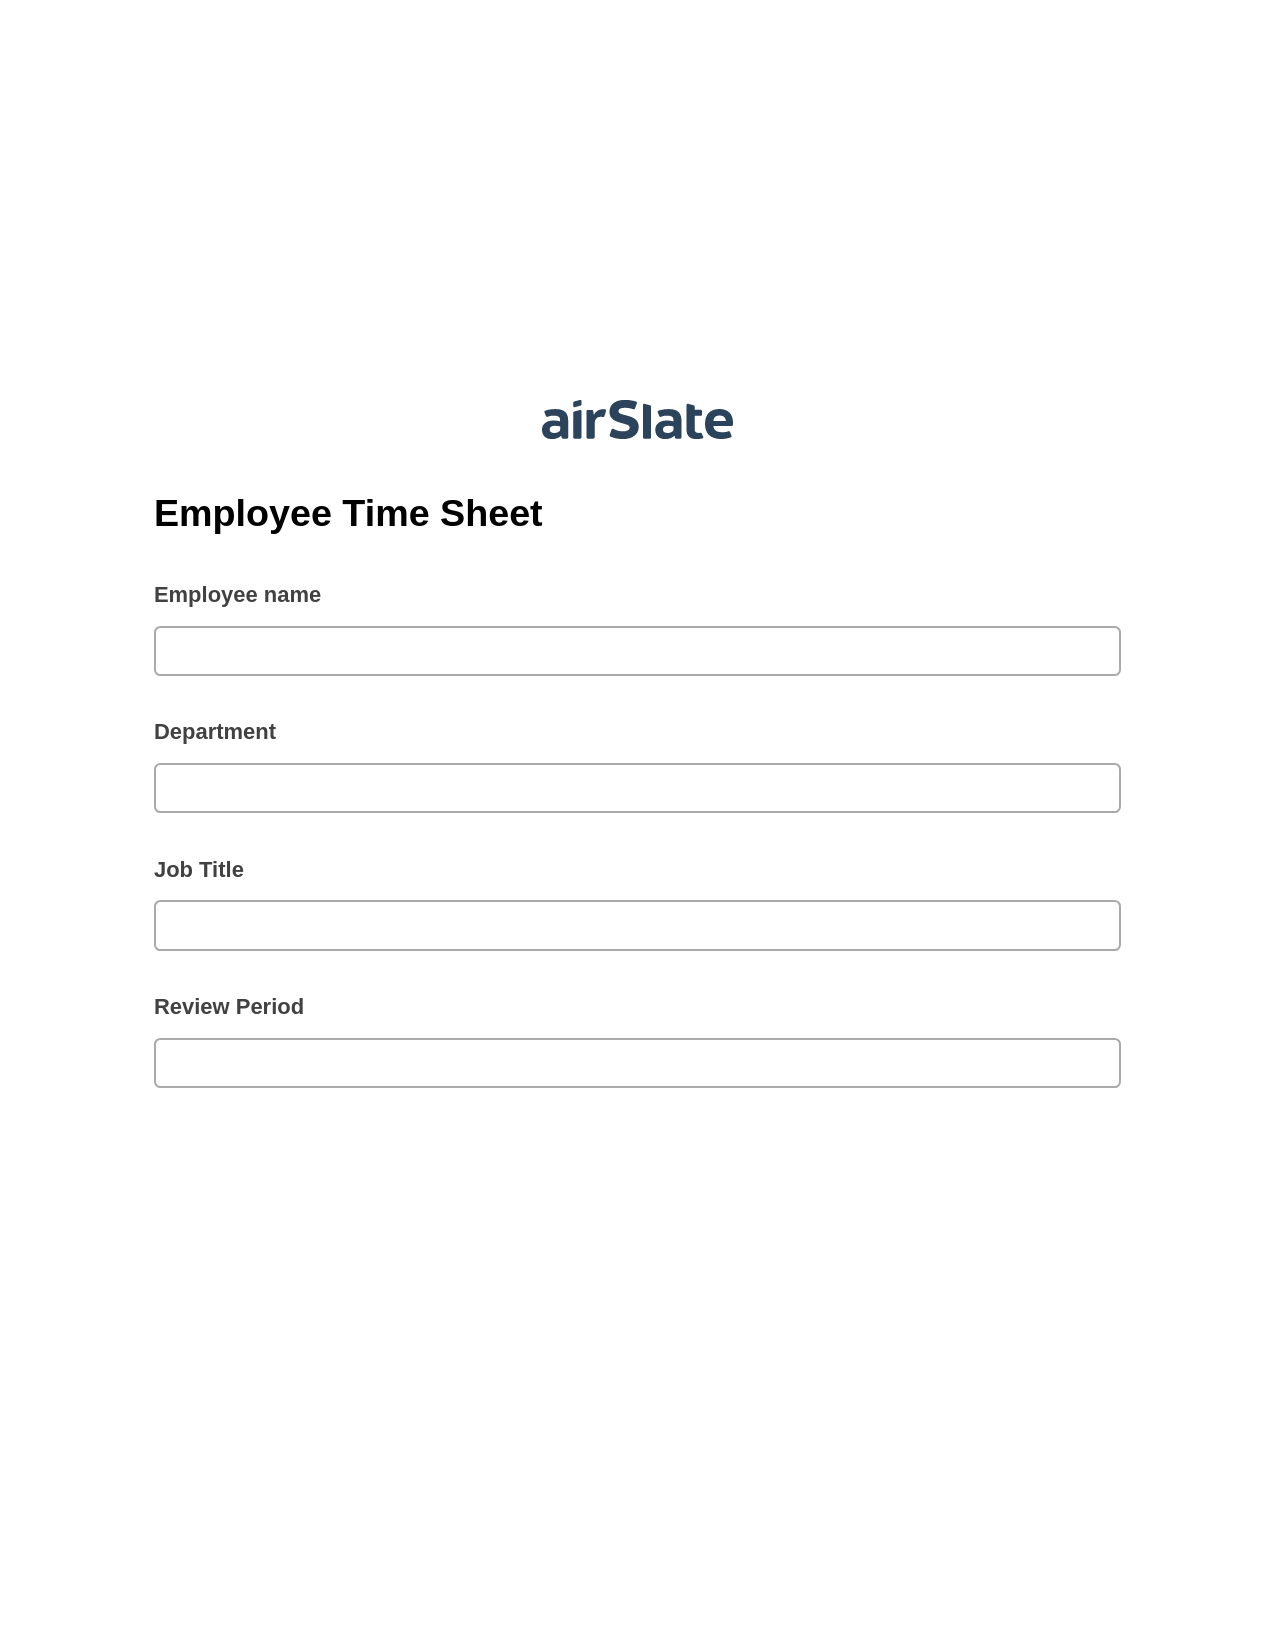 Multirole Employee Time Sheet Pre-fill from Excel Spreadsheet Bot, Create slate bot, Export to WebMerge Bot